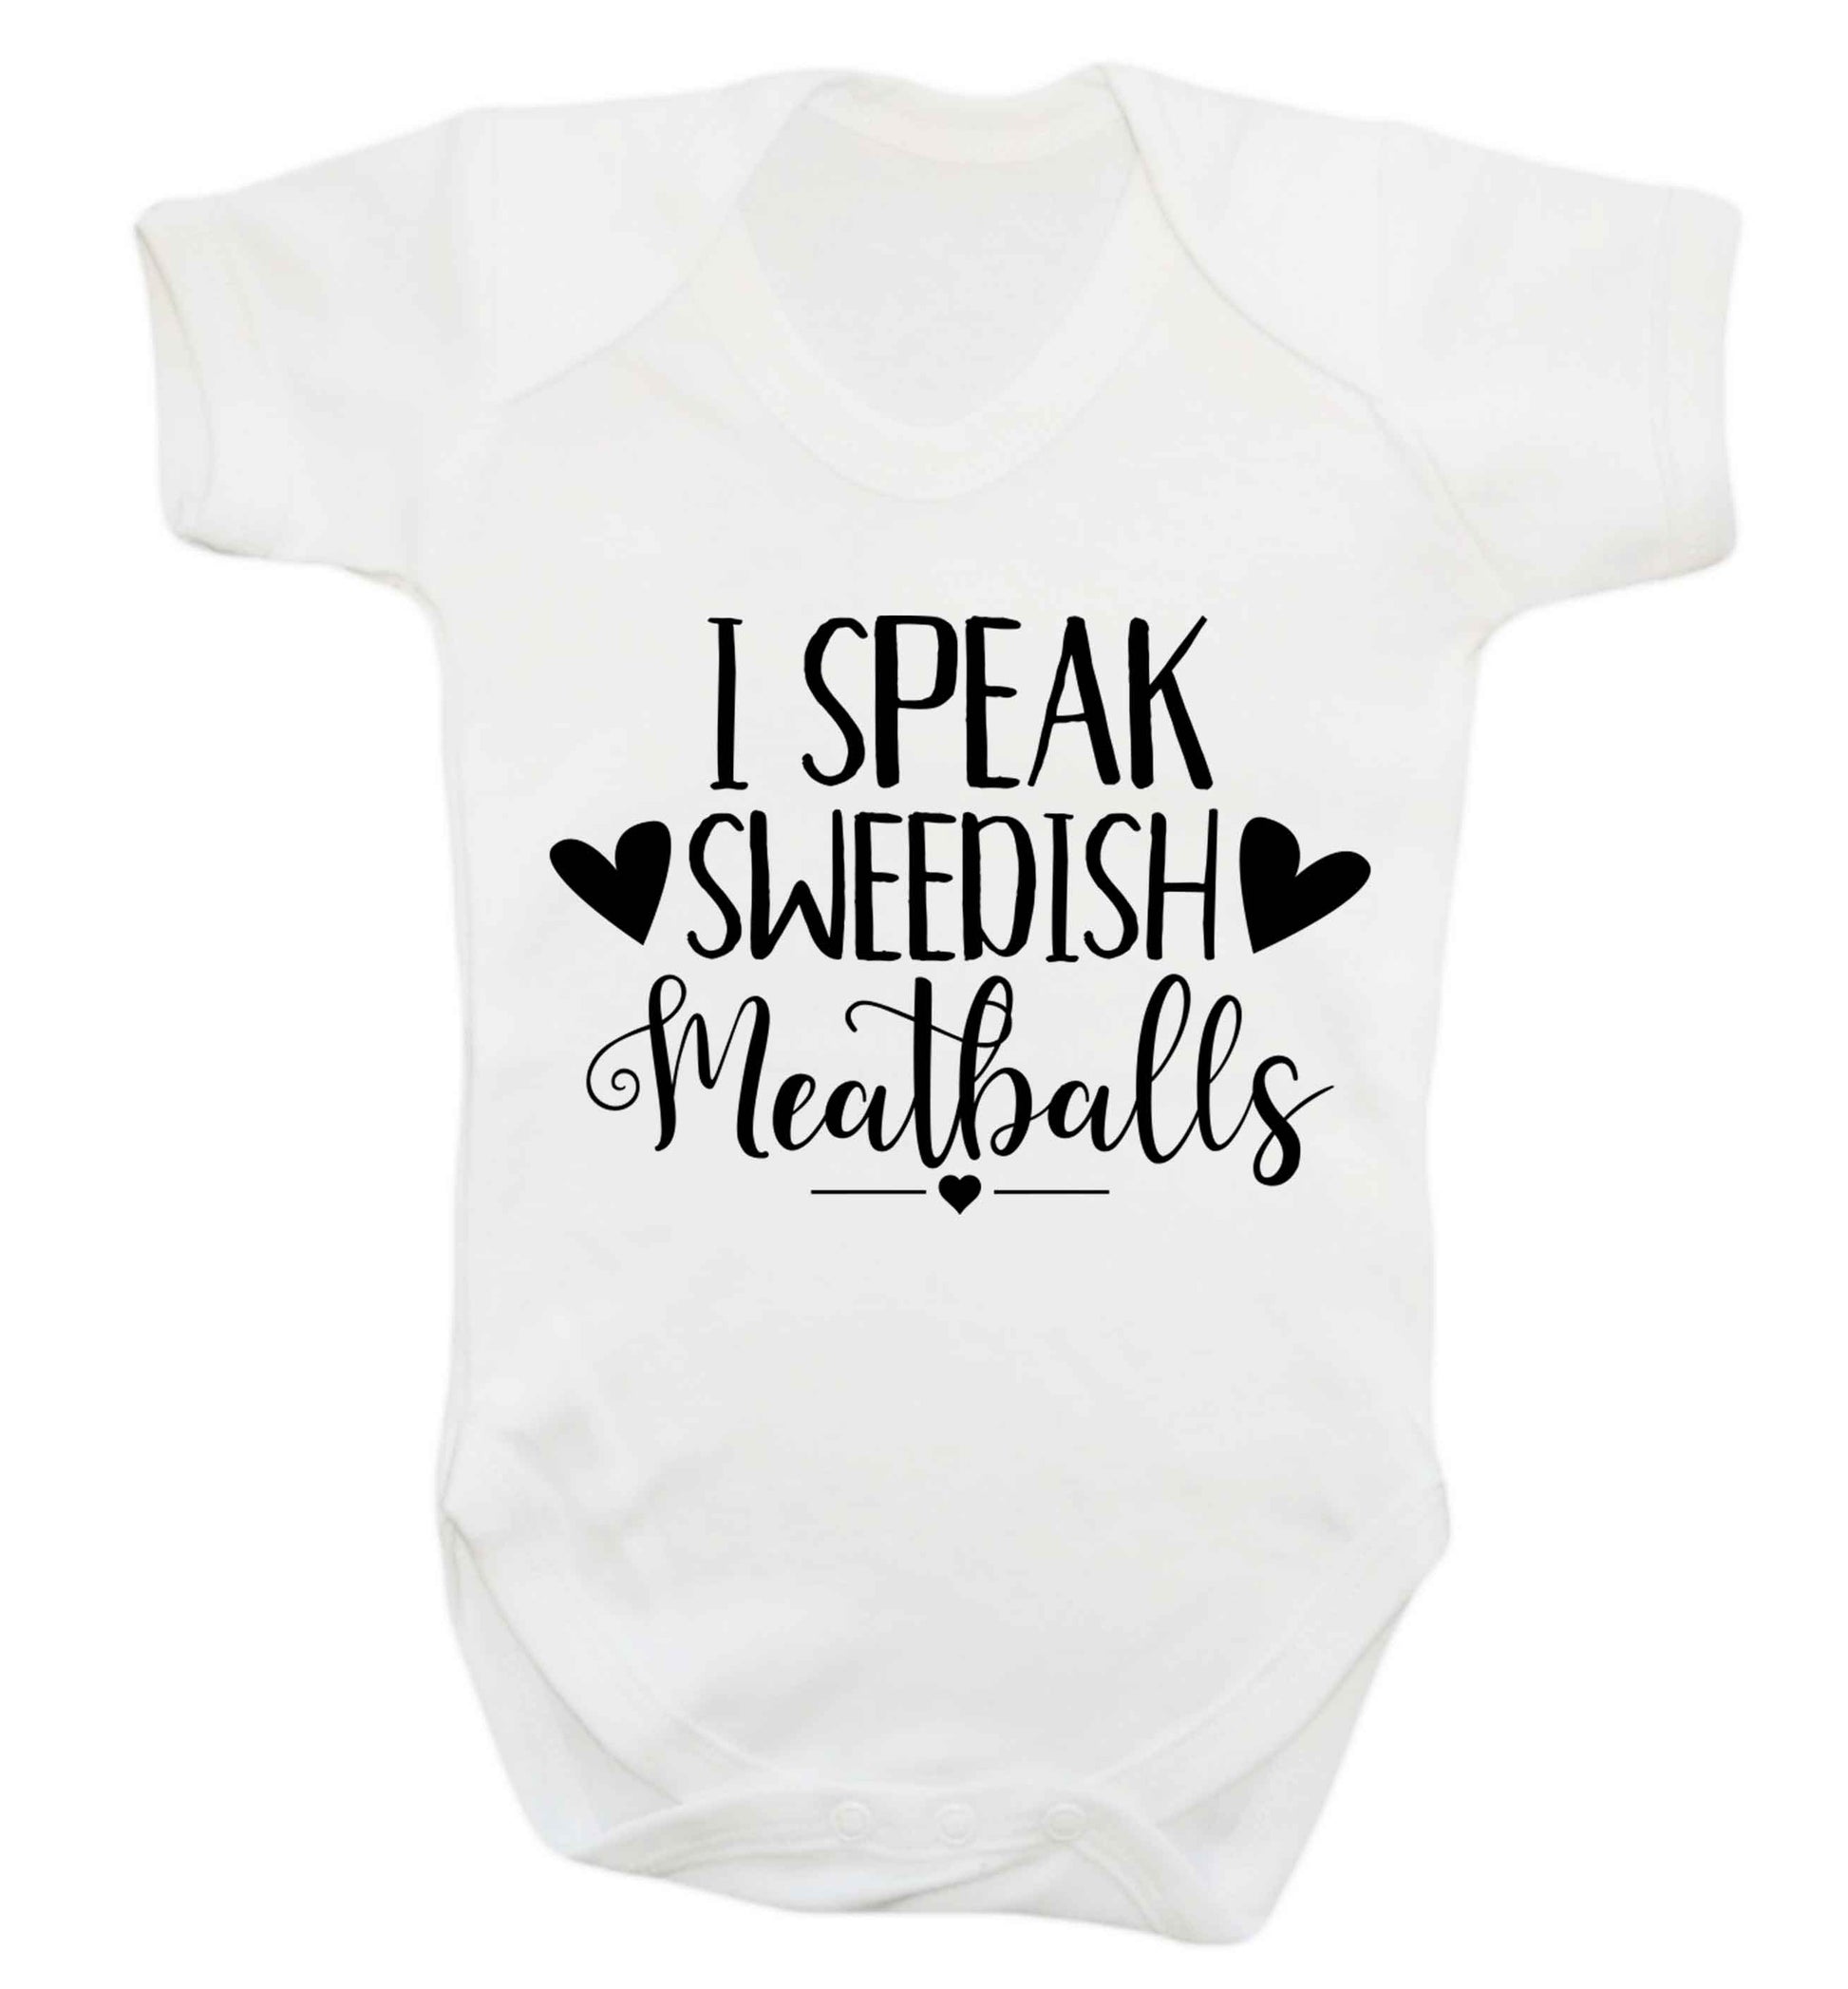 I speak sweedish...meatballs Baby Vest white 18-24 months